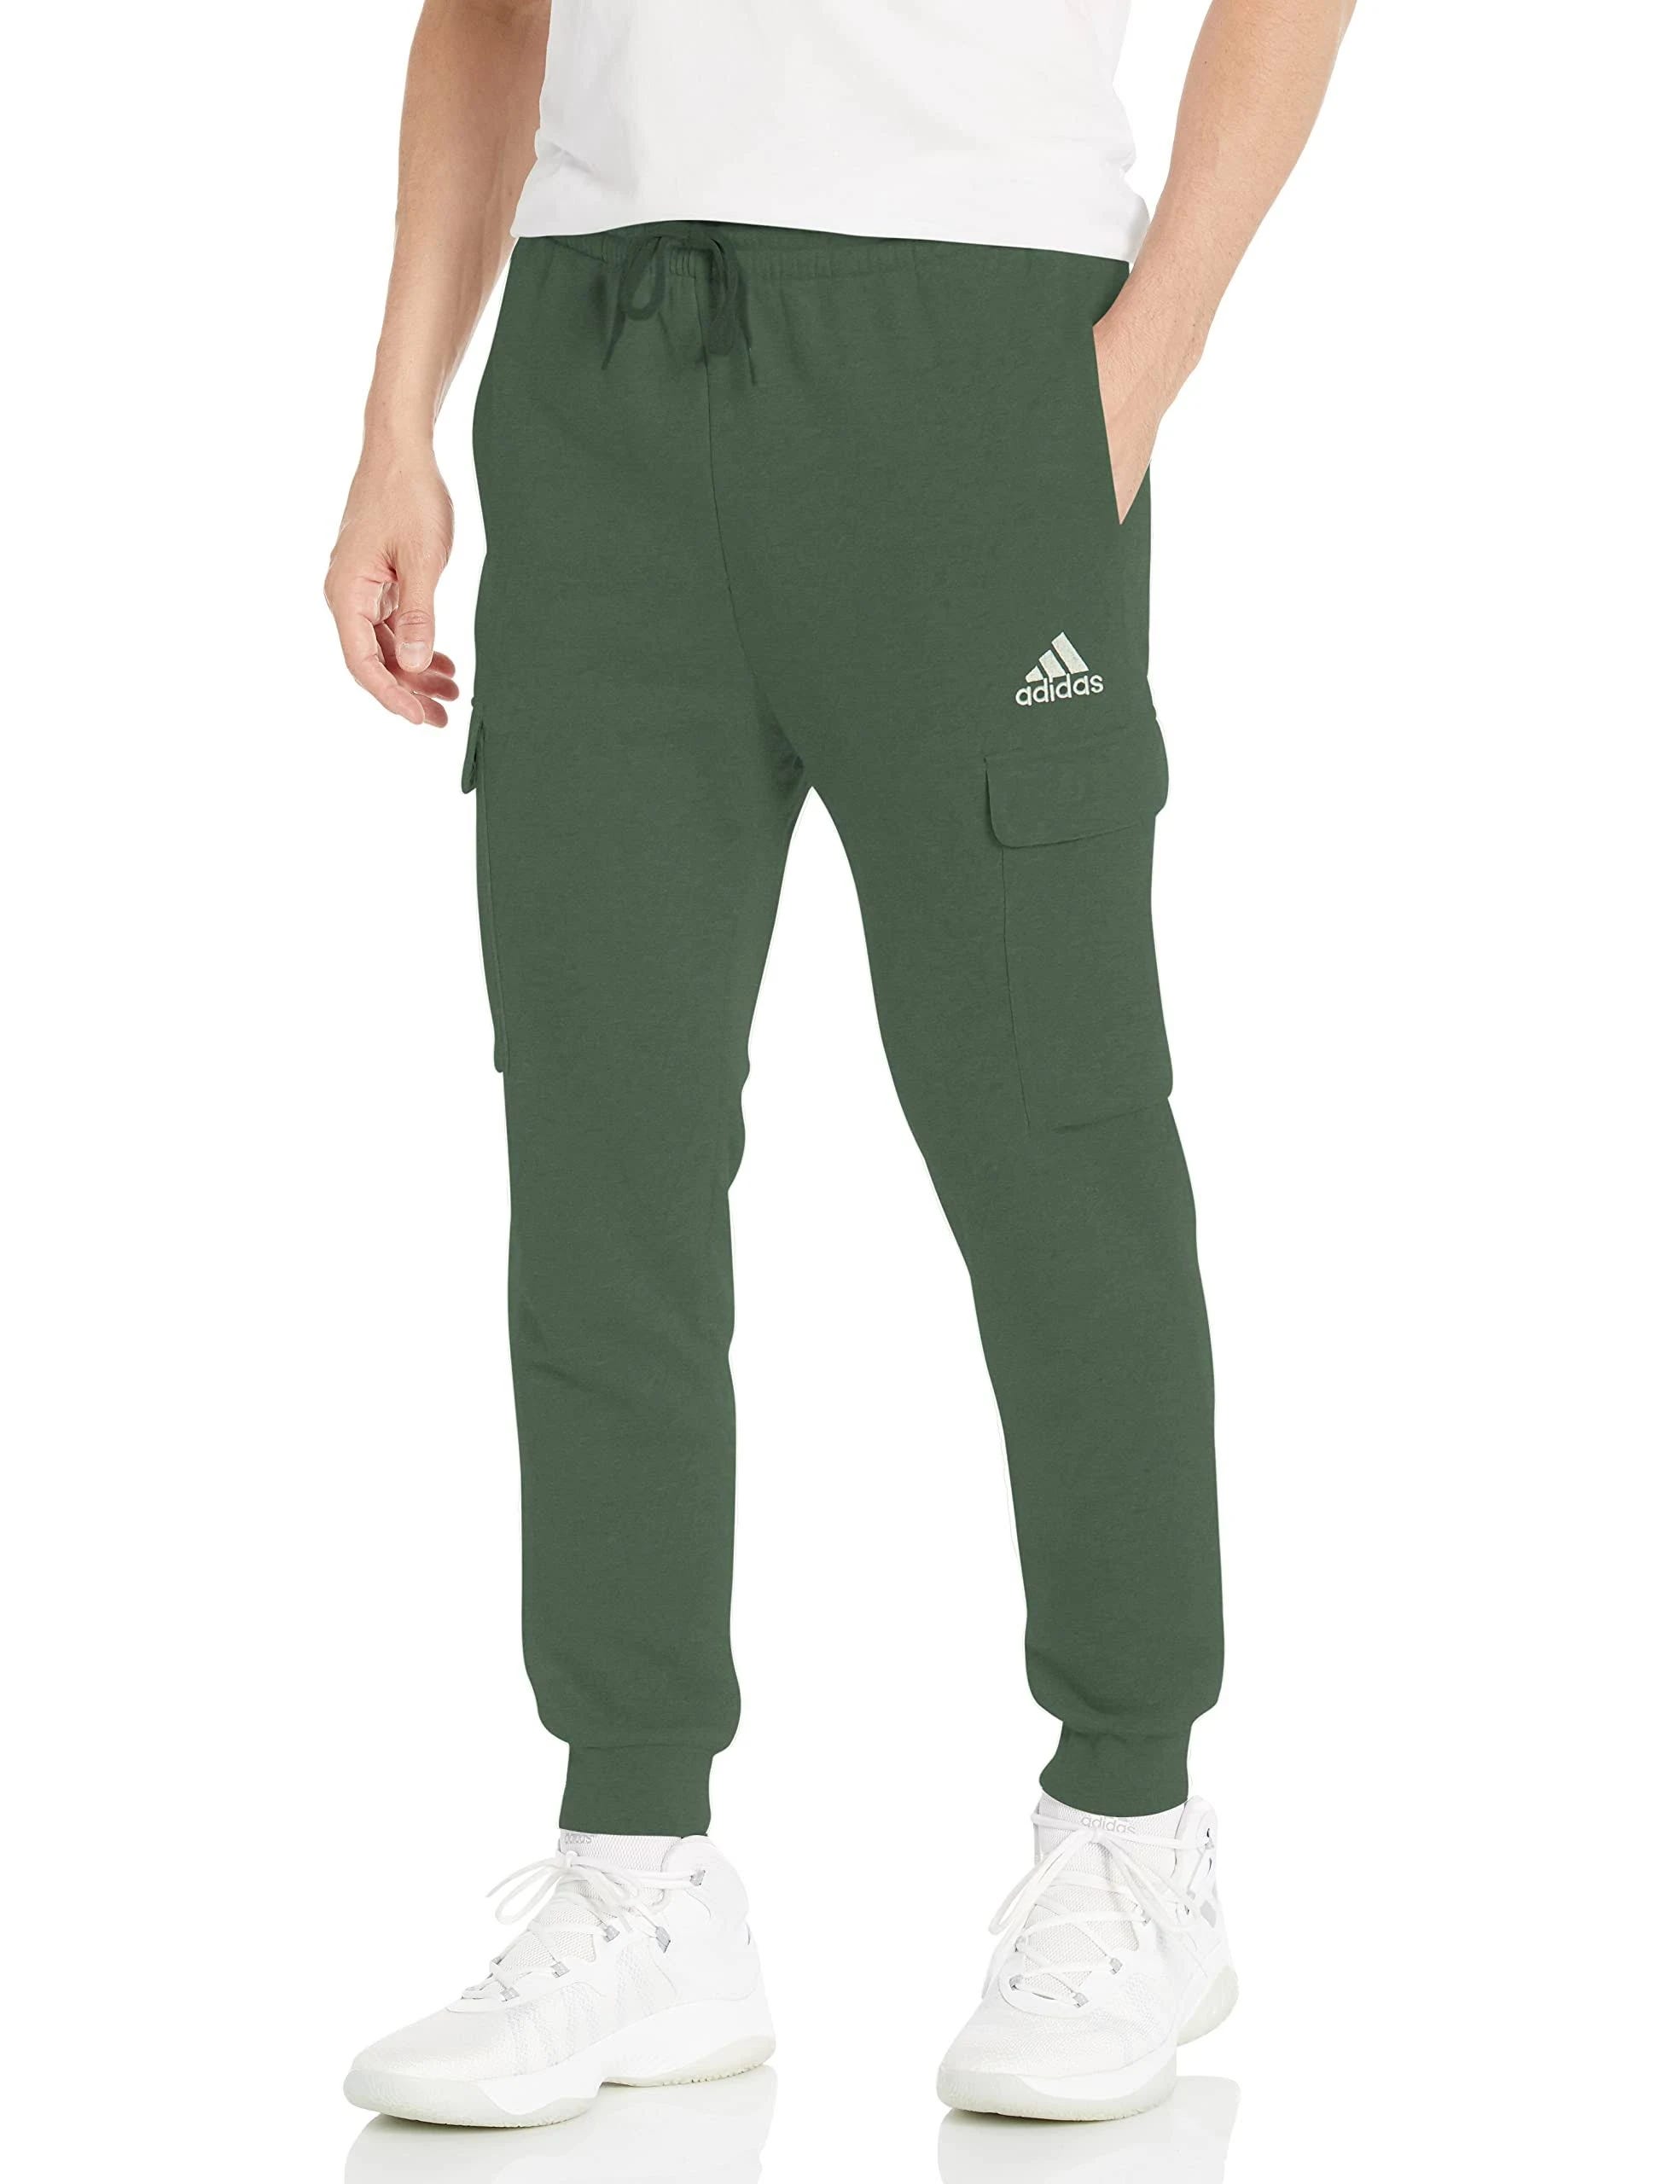 Stylish Adidas Men's Fleece Cargo Joggers in Green | Image